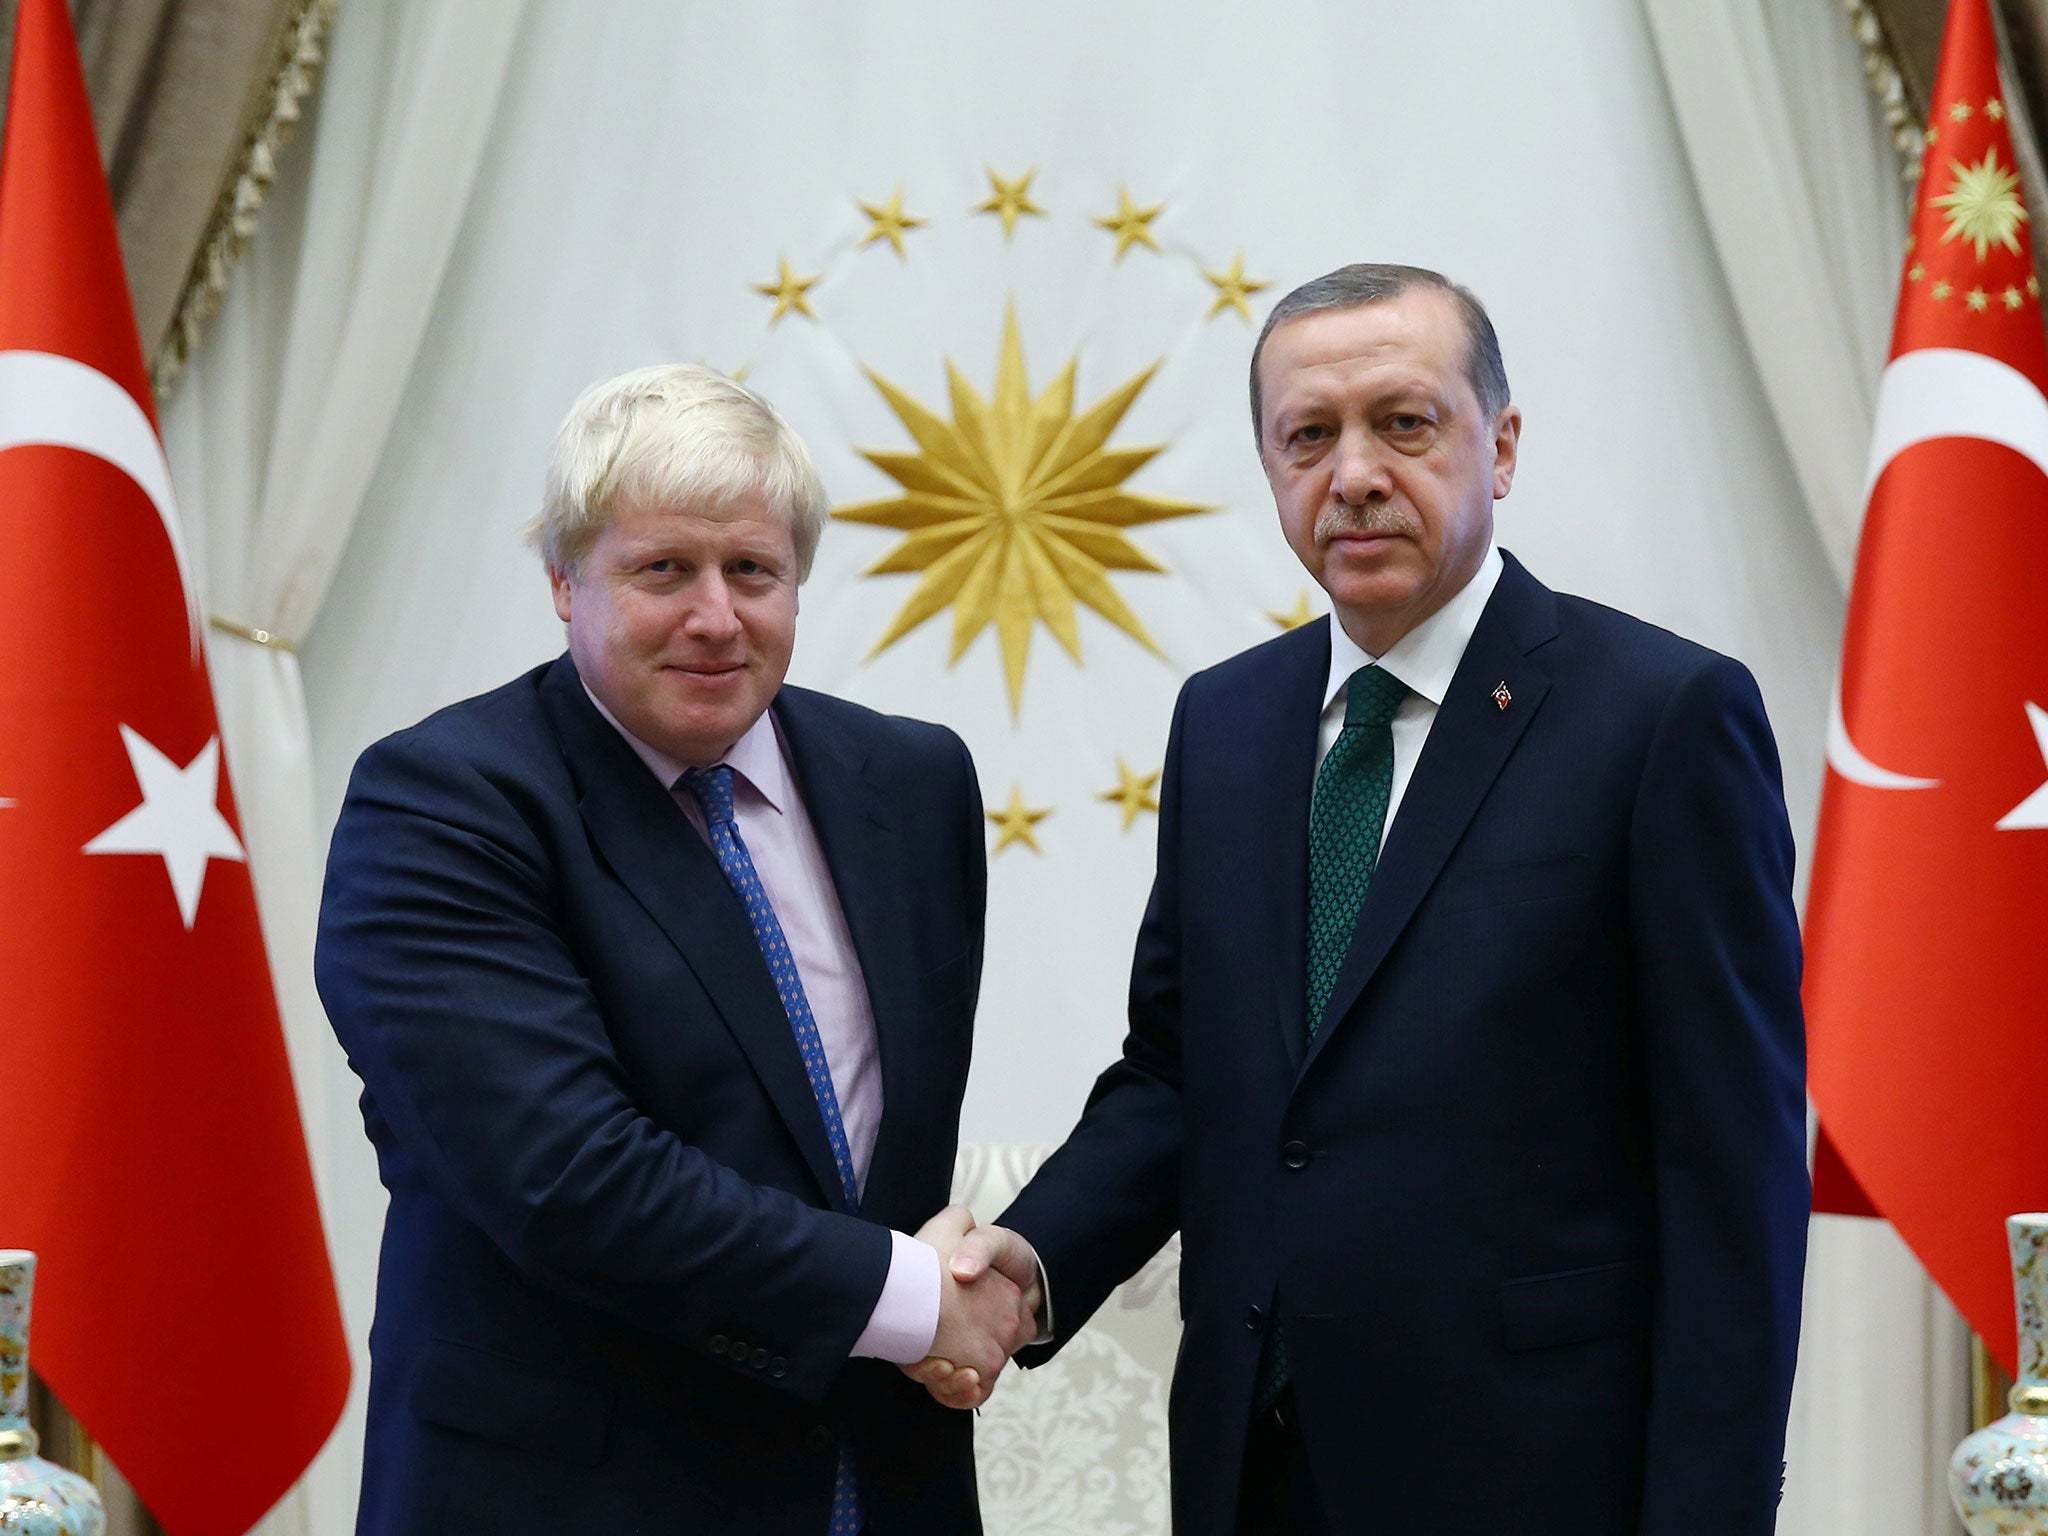 Boris Johnson and Recep Tayyip Erdogan at their meeting in Ankara